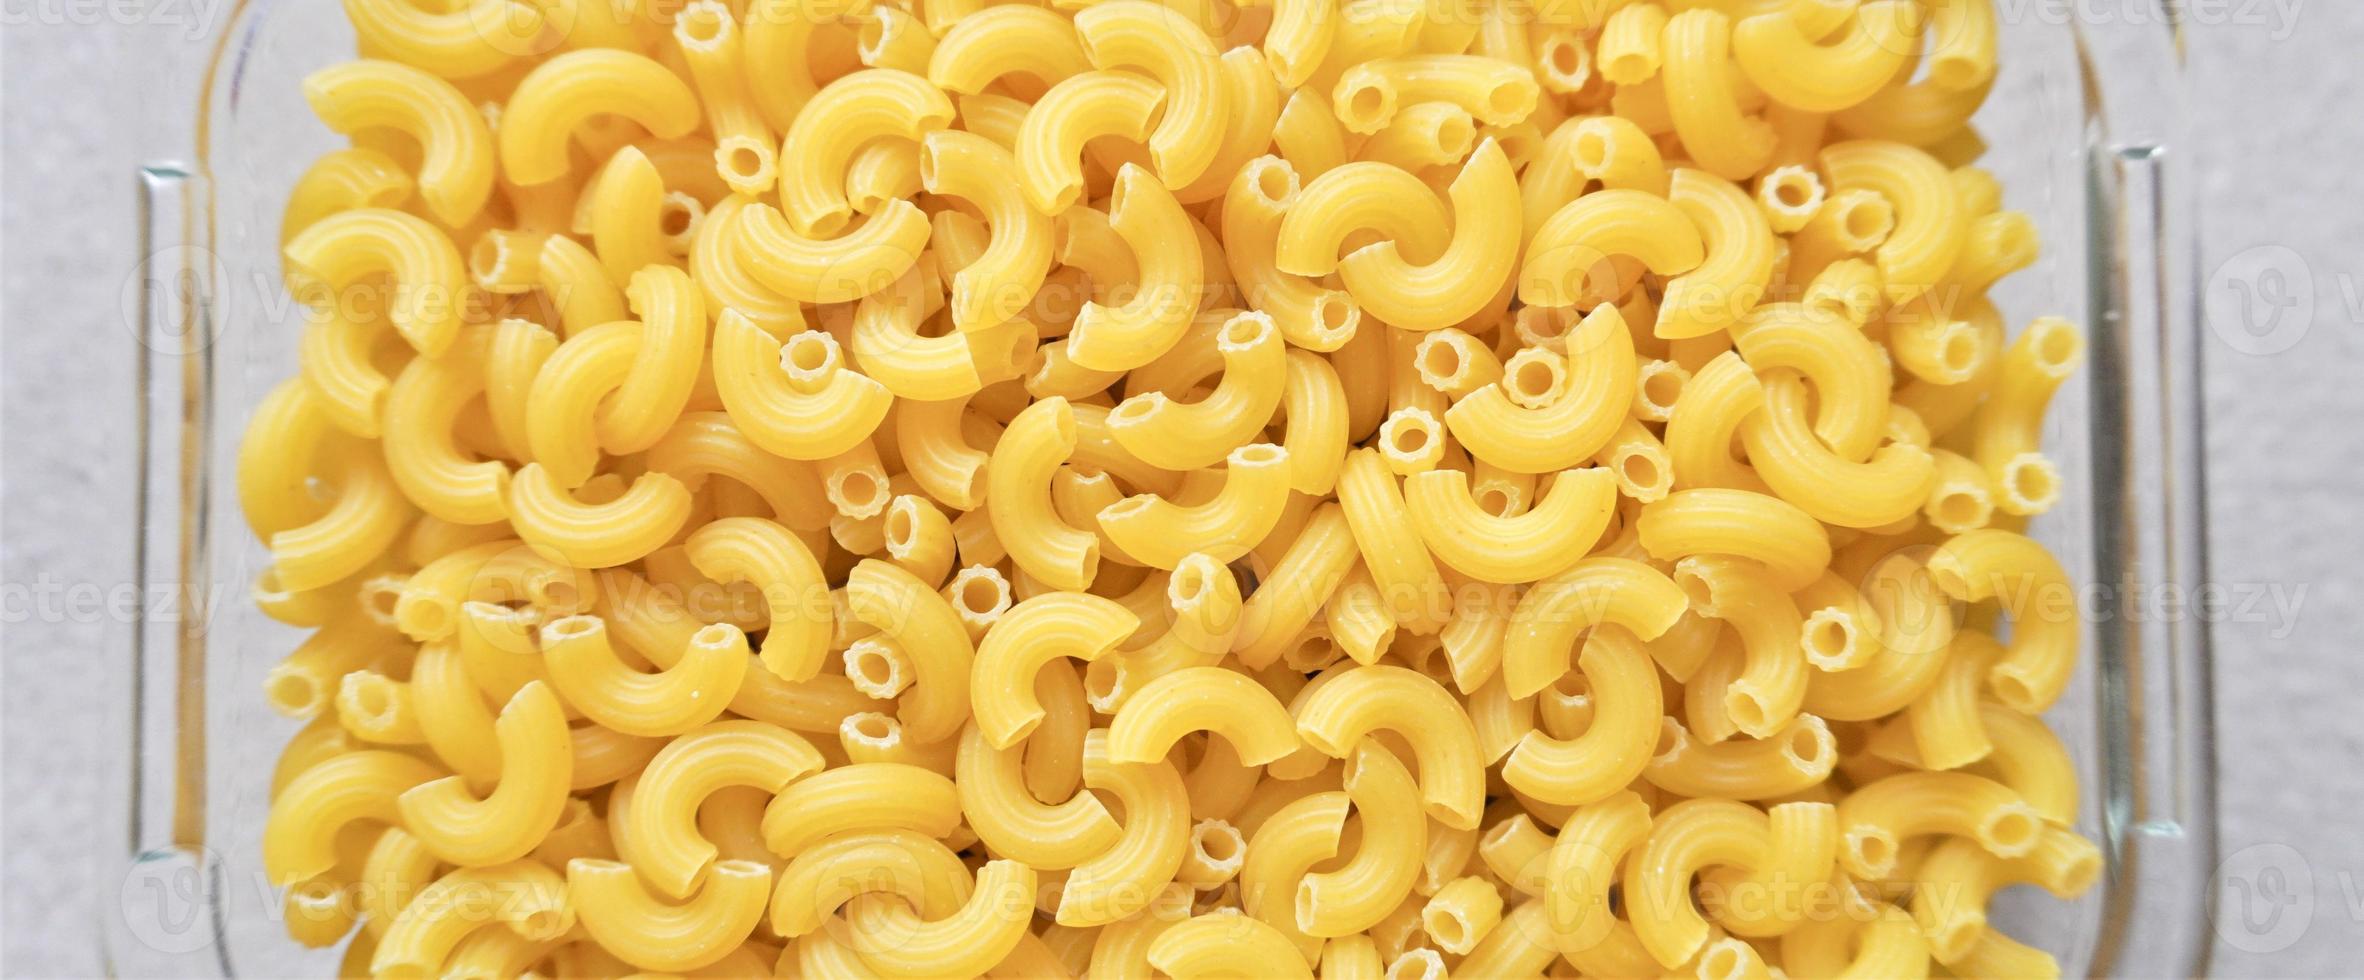 ongekookt elleboog macaroni pasta achtergrond foto